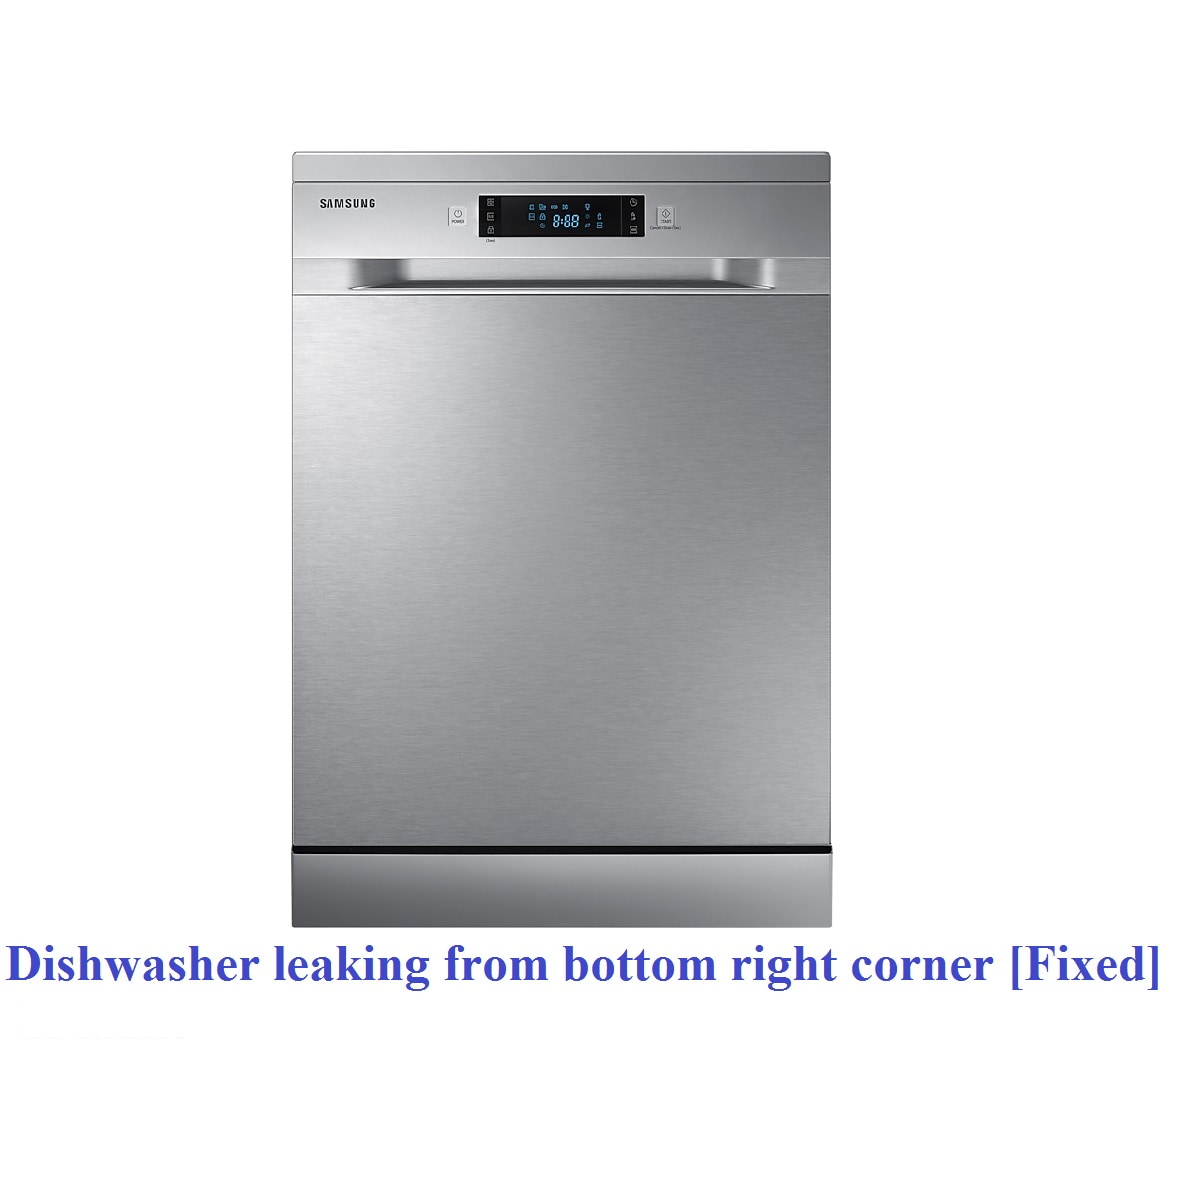 Dishwasher leaking from bottom right corner